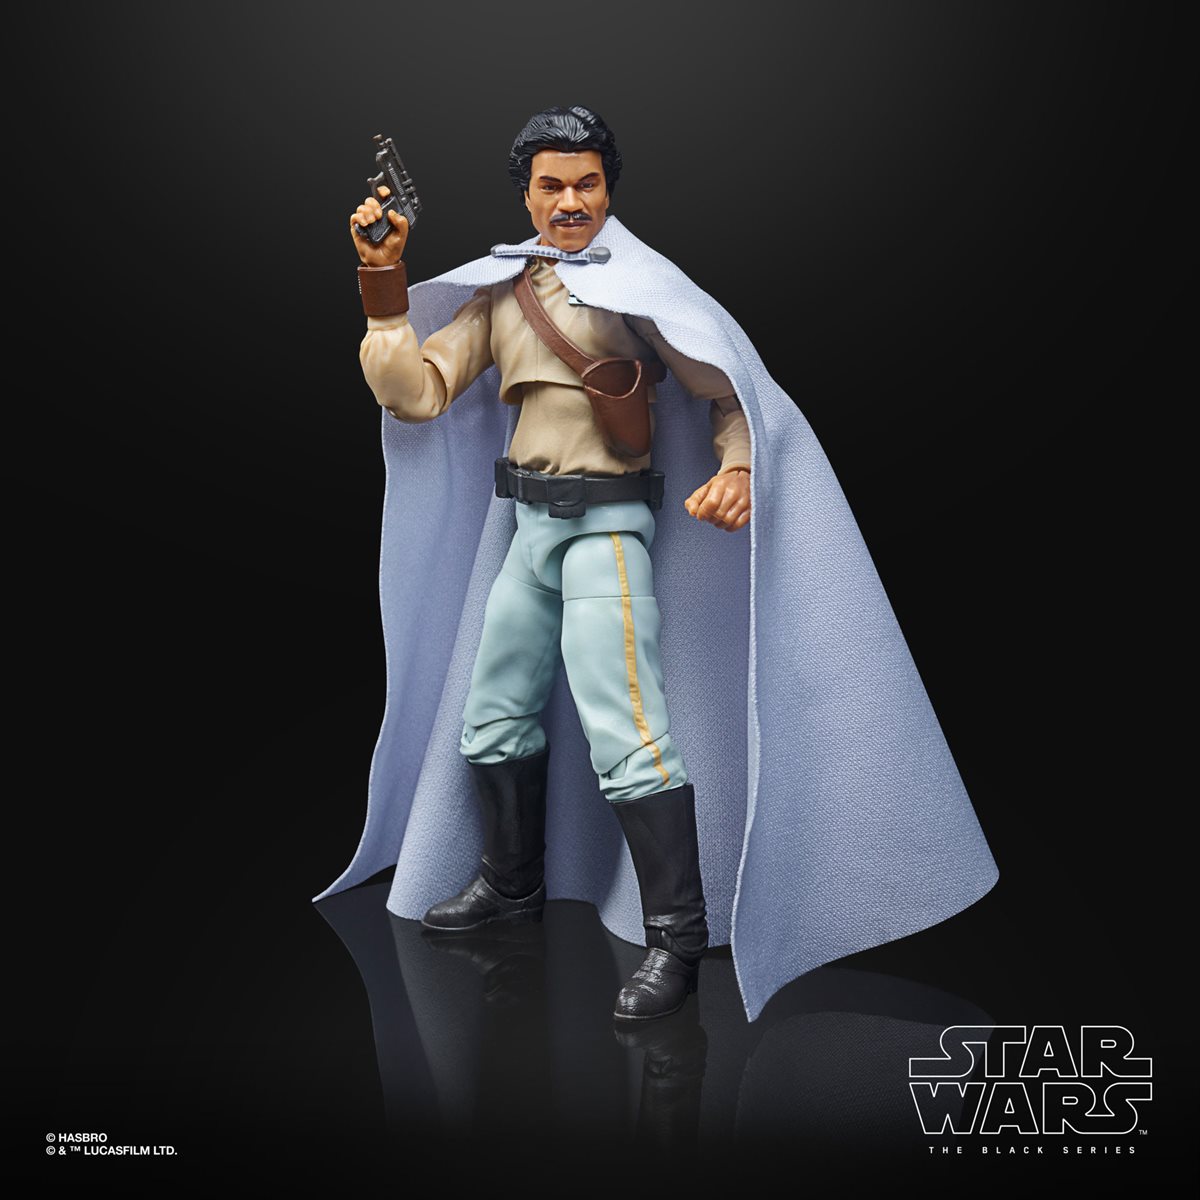 Star Wars The Black Series Lando Calrissian Action Figures Hasbro 2015 for sale online 